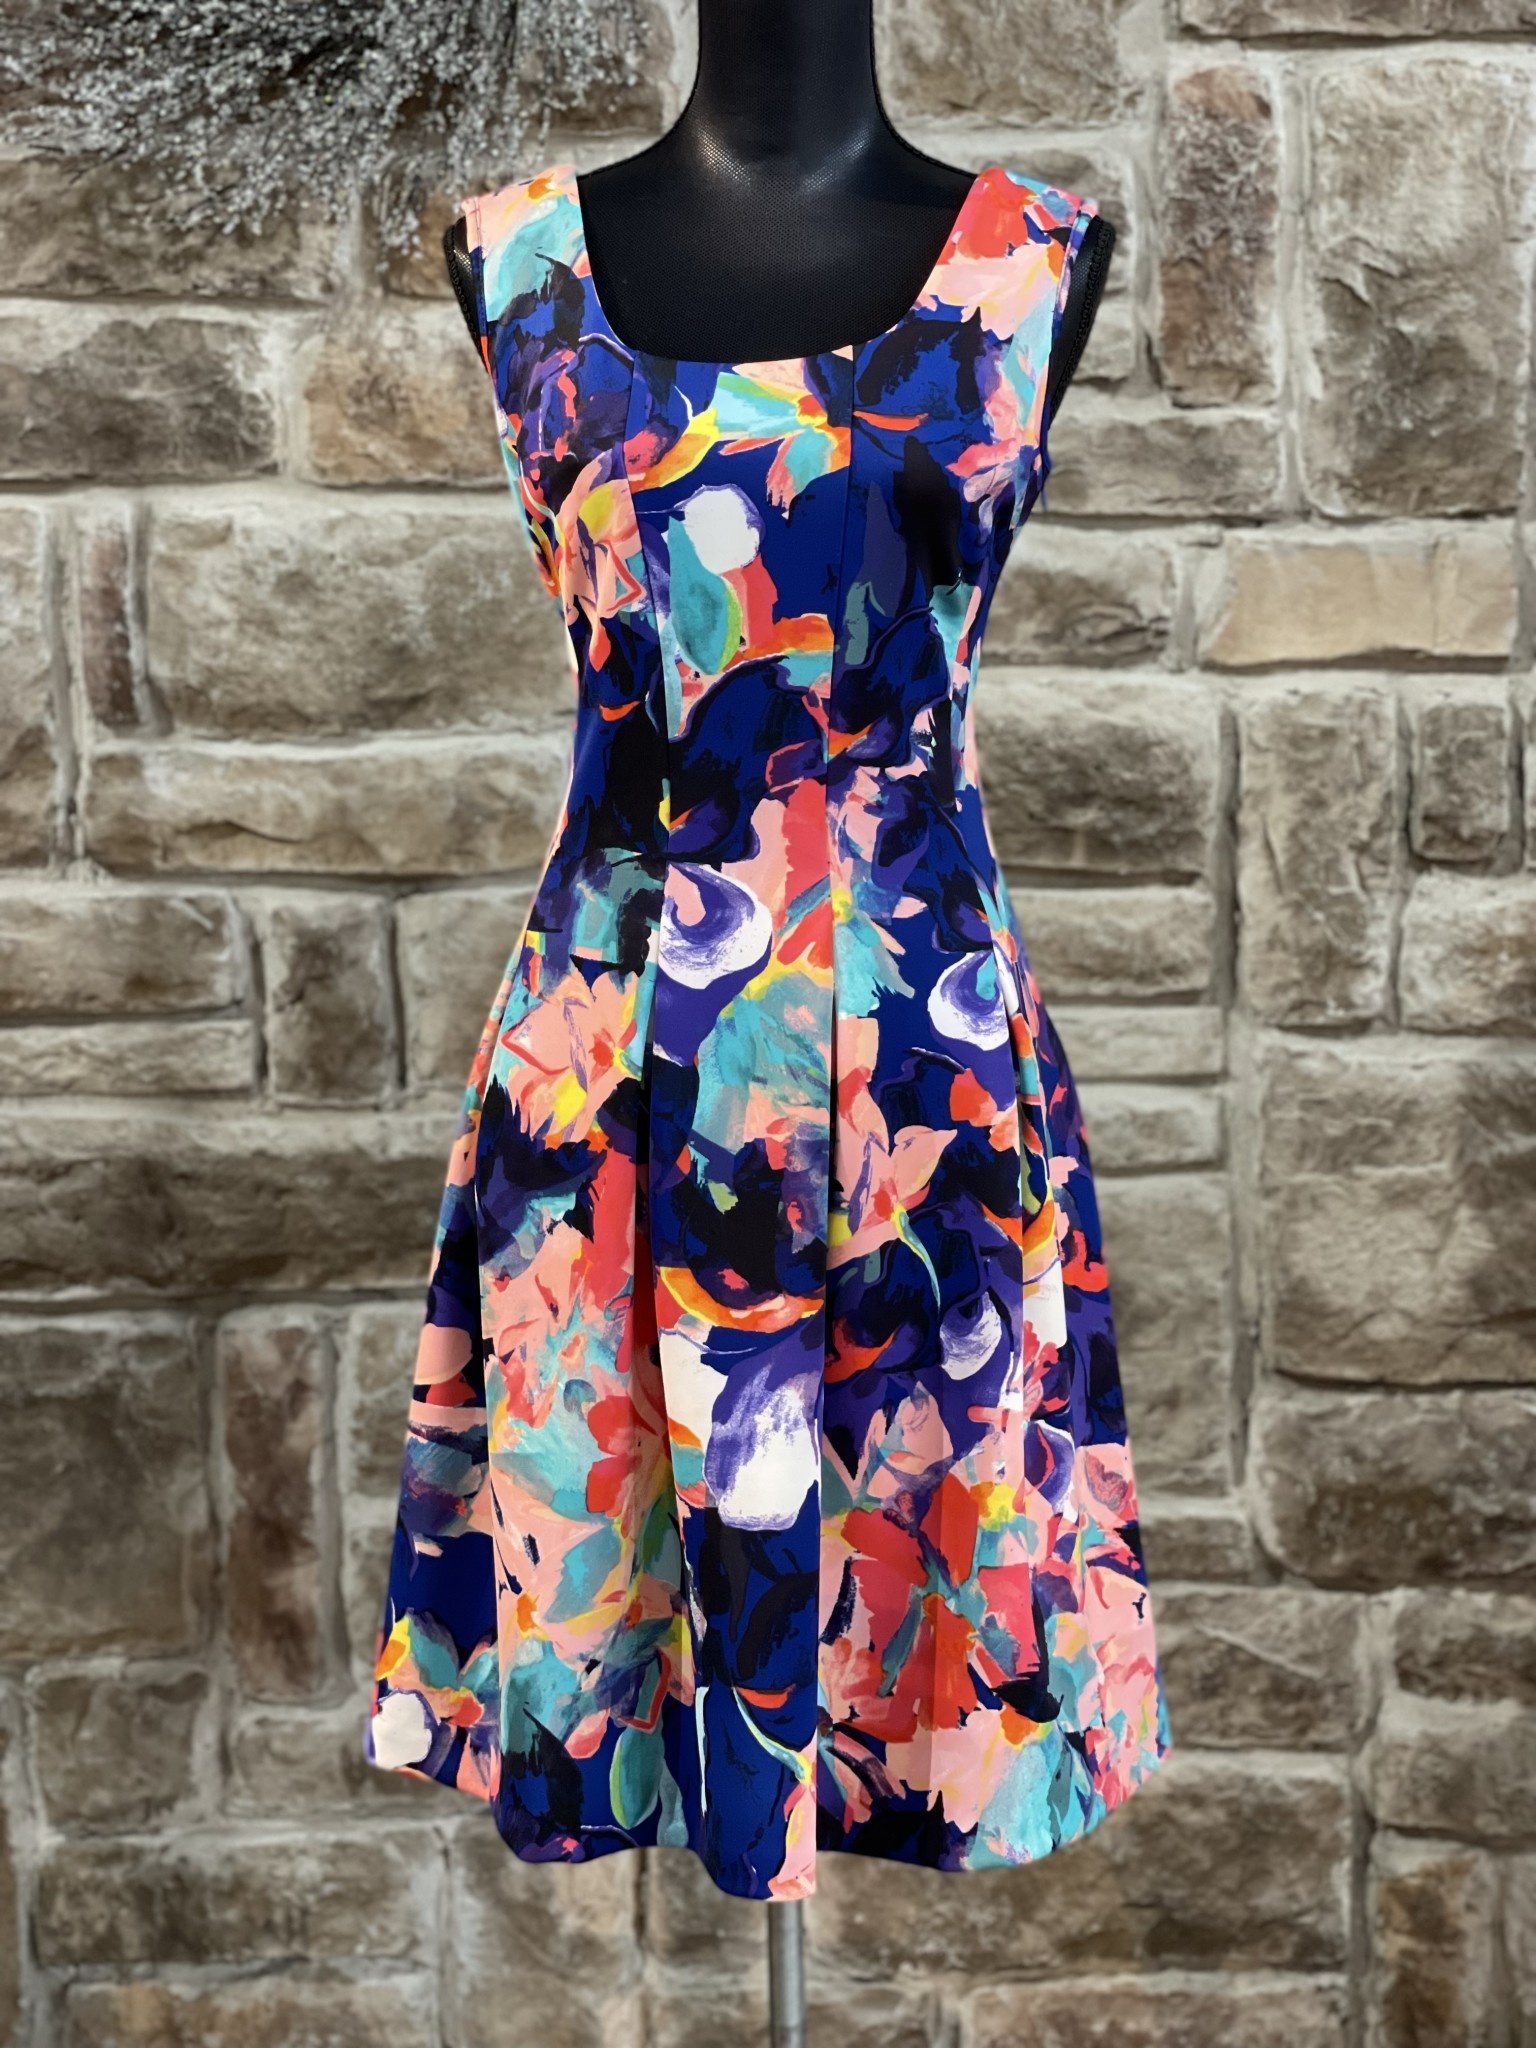 Multi-Coloured Floral Printed Sleeveless Dress